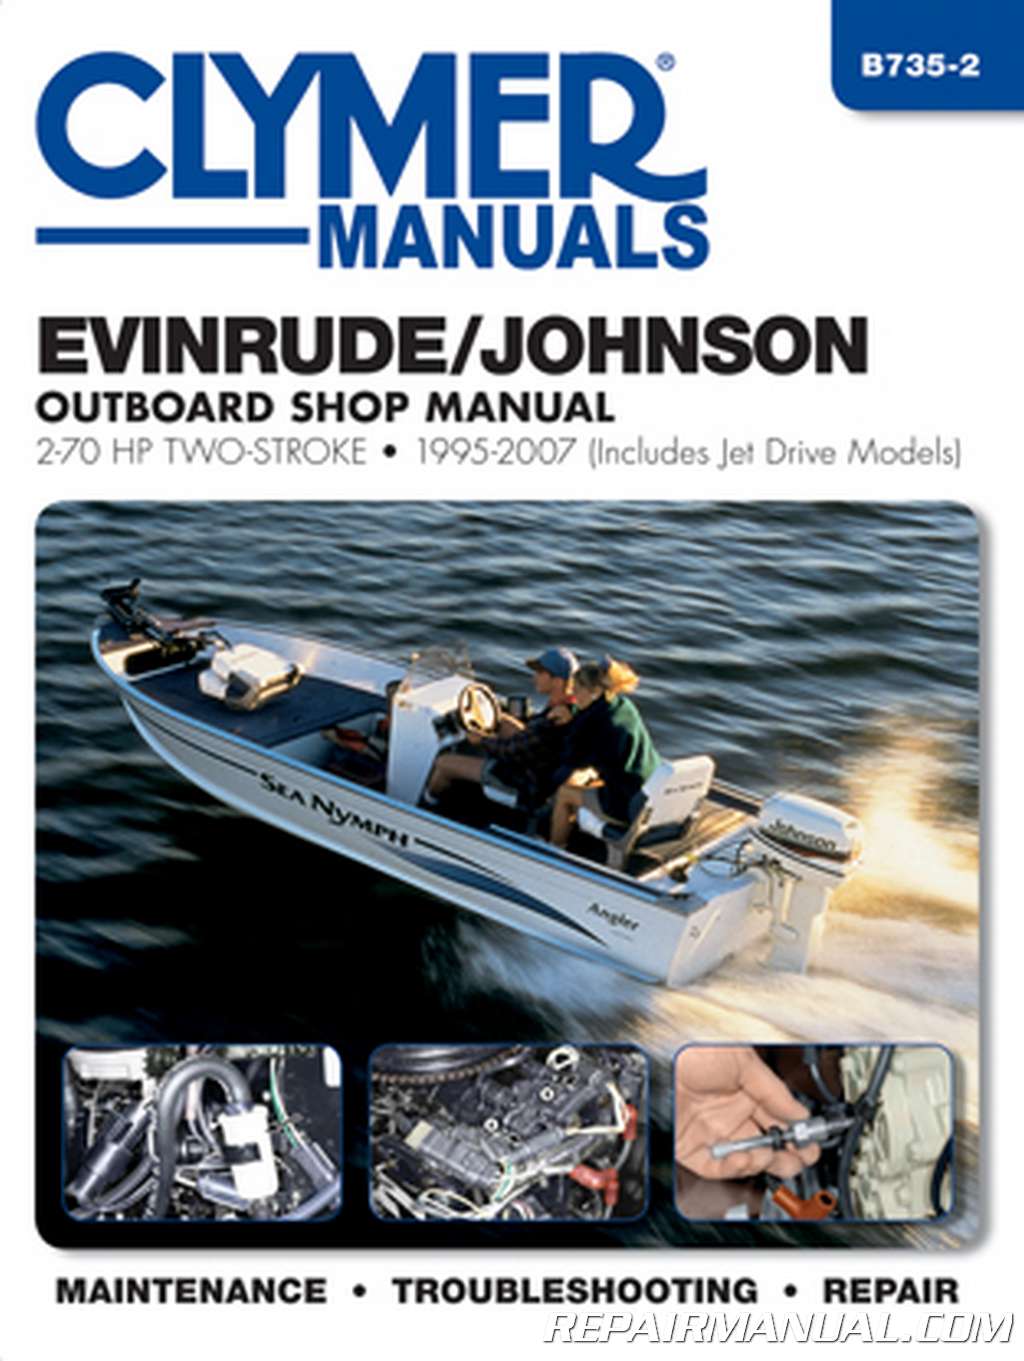 1995-2007 Evinrude/Johnson Outboard Shop Manual, 2-70 HP Two-Stroke